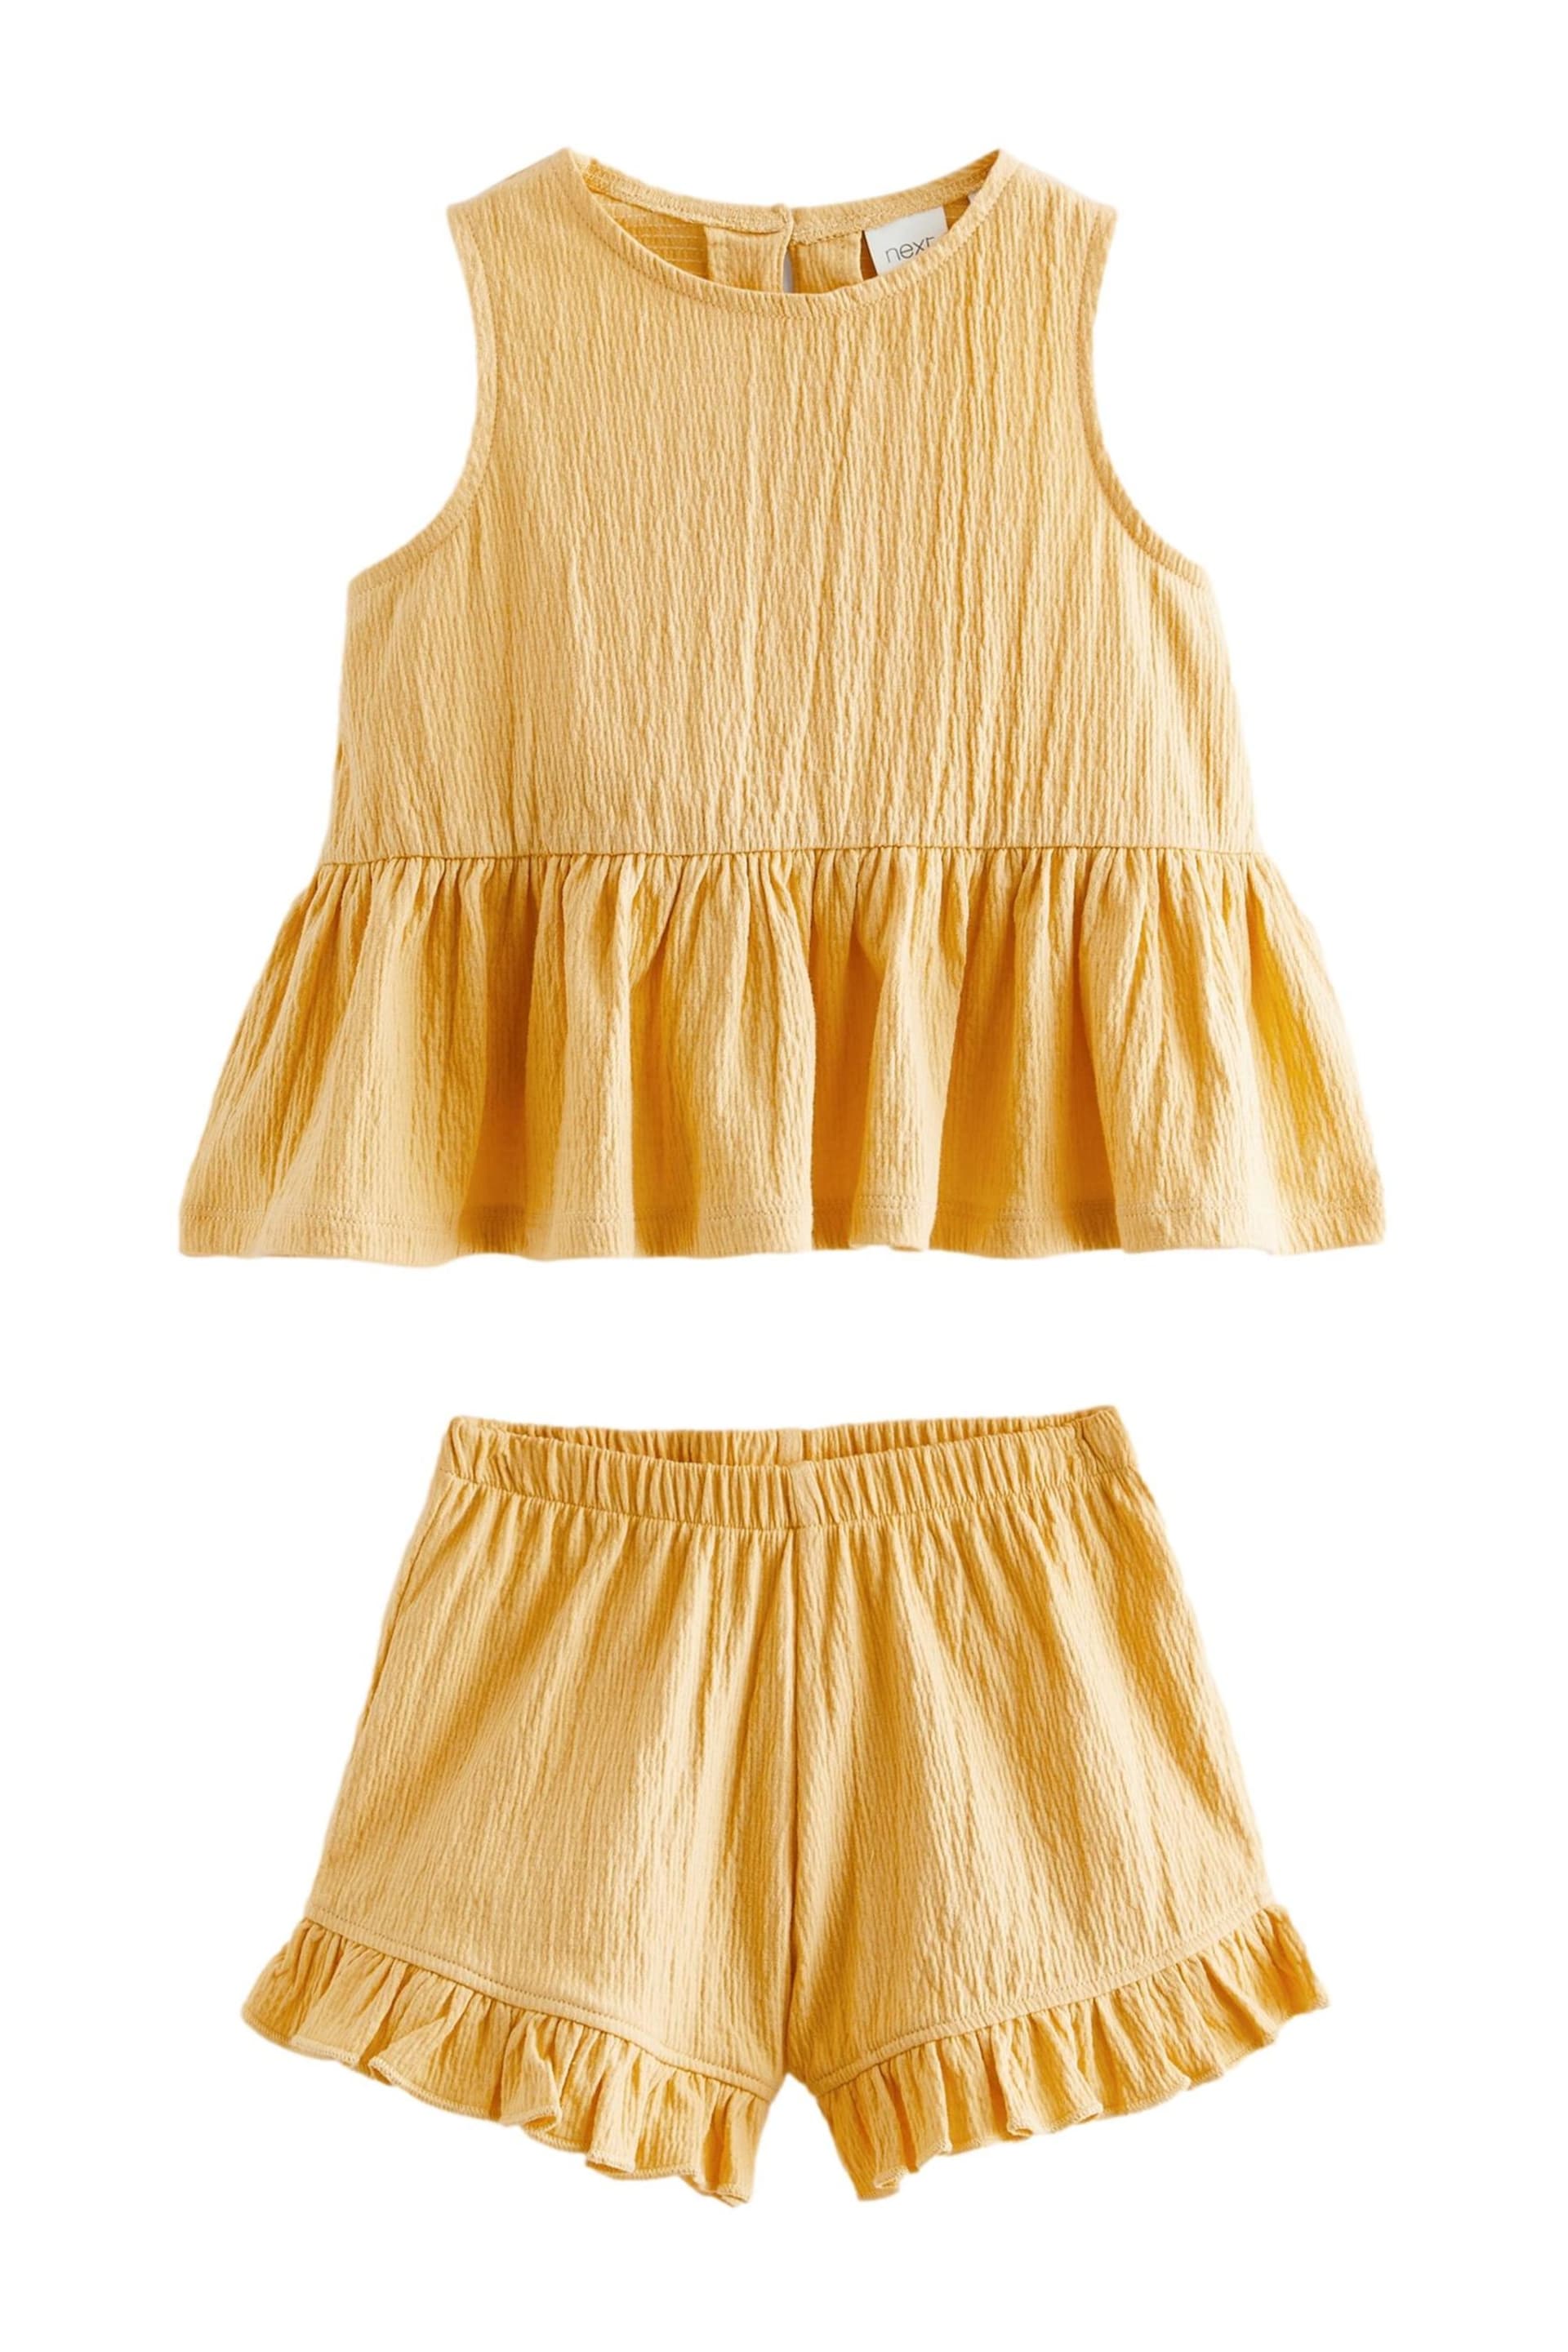 Yellow Textured Sleeveless Peplum Top and Shorts Set (3mths-7yrs) - Image 1 of 3